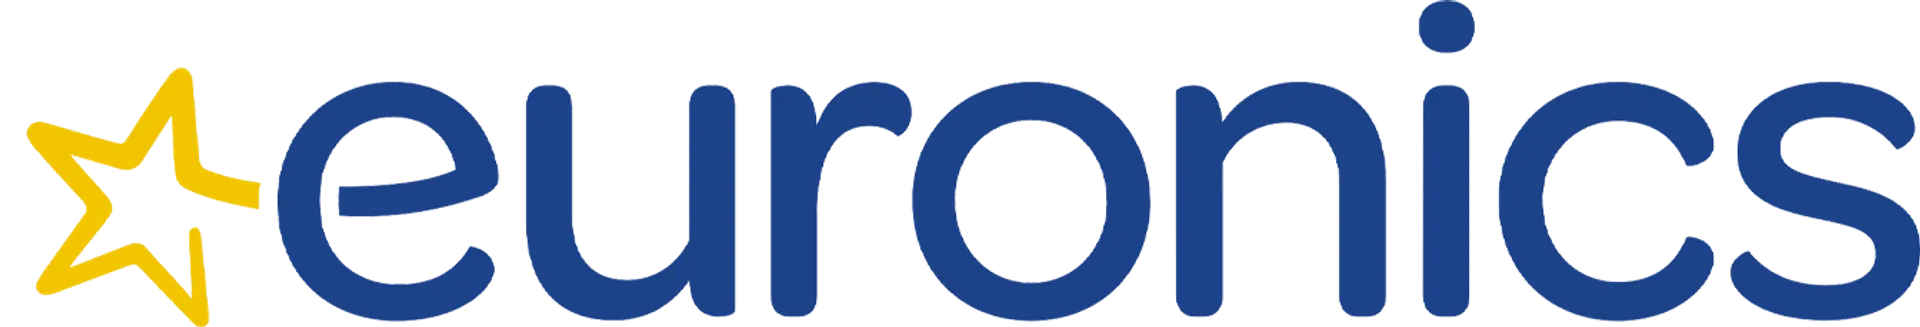 EURONICS logo. Current weekly ad